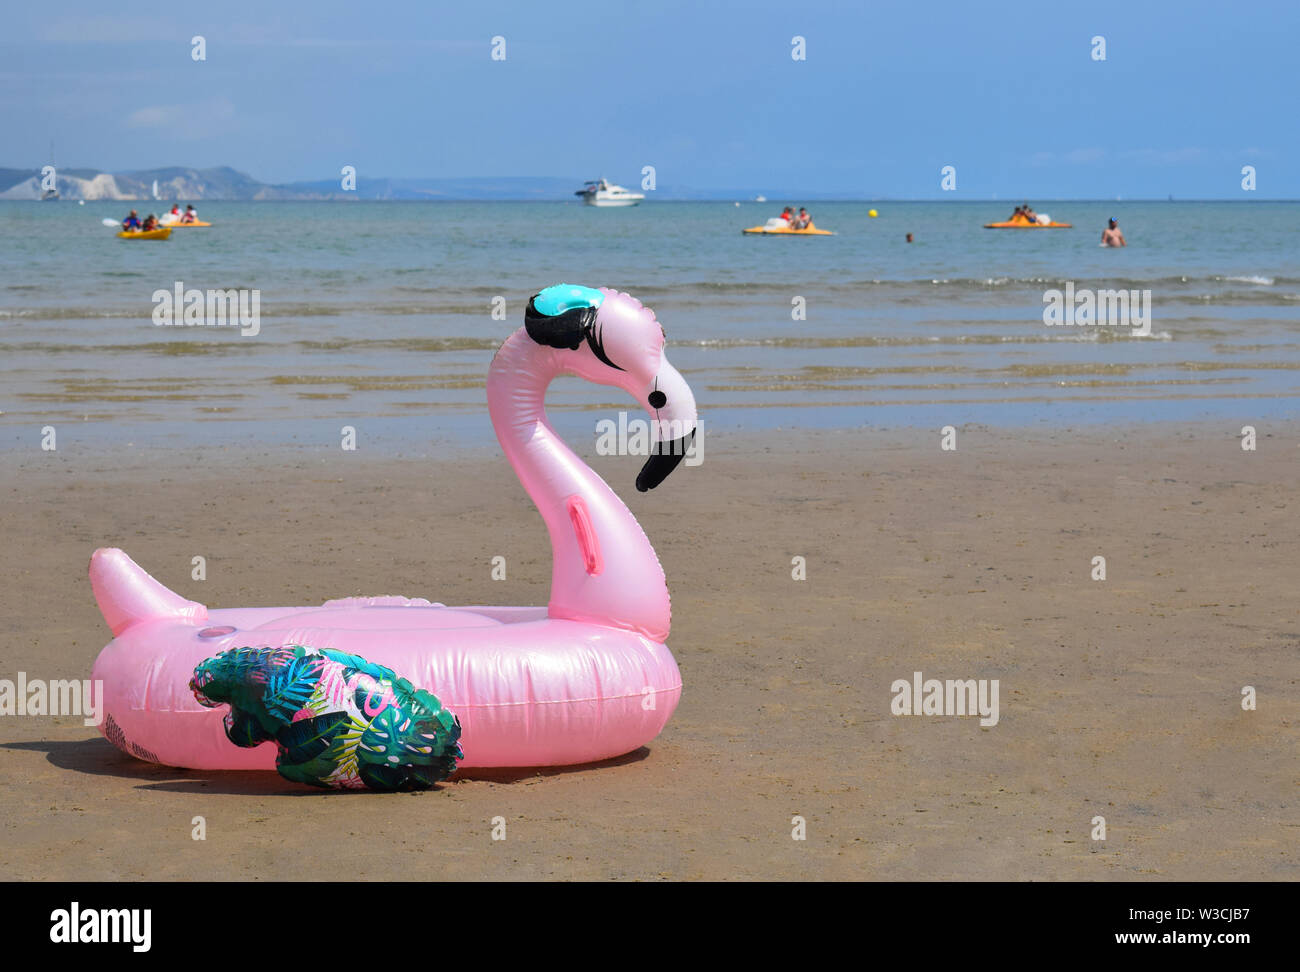 Flamingo and Unicorn Sky, Flamingo Photography, Ocean